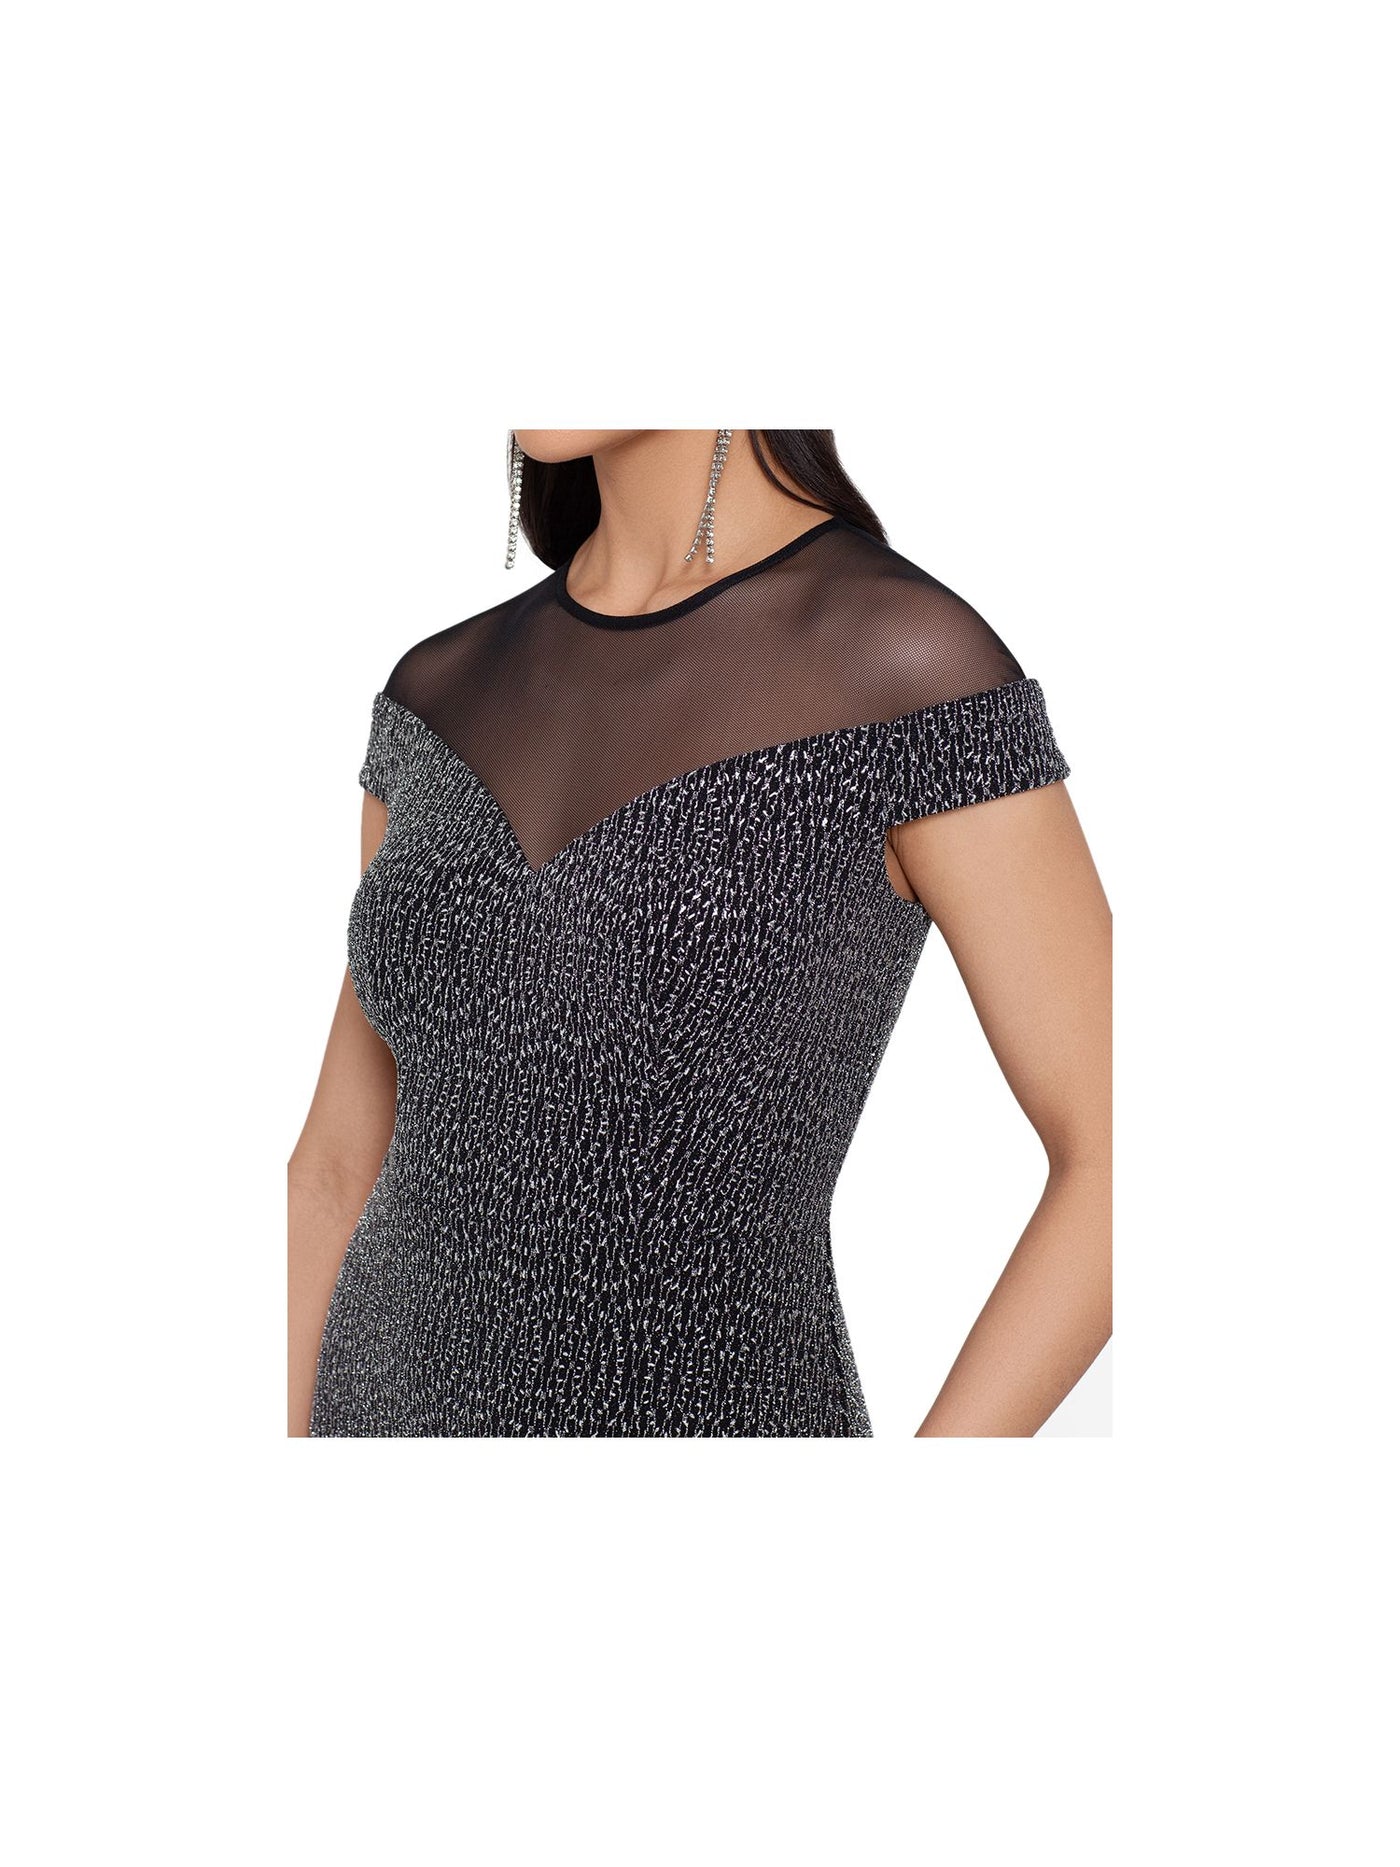 B&A  BY BETSY & ADAM Womens Textured Illusion Short Sleeve Crew Neck Full-Length Evening Sheath Dress